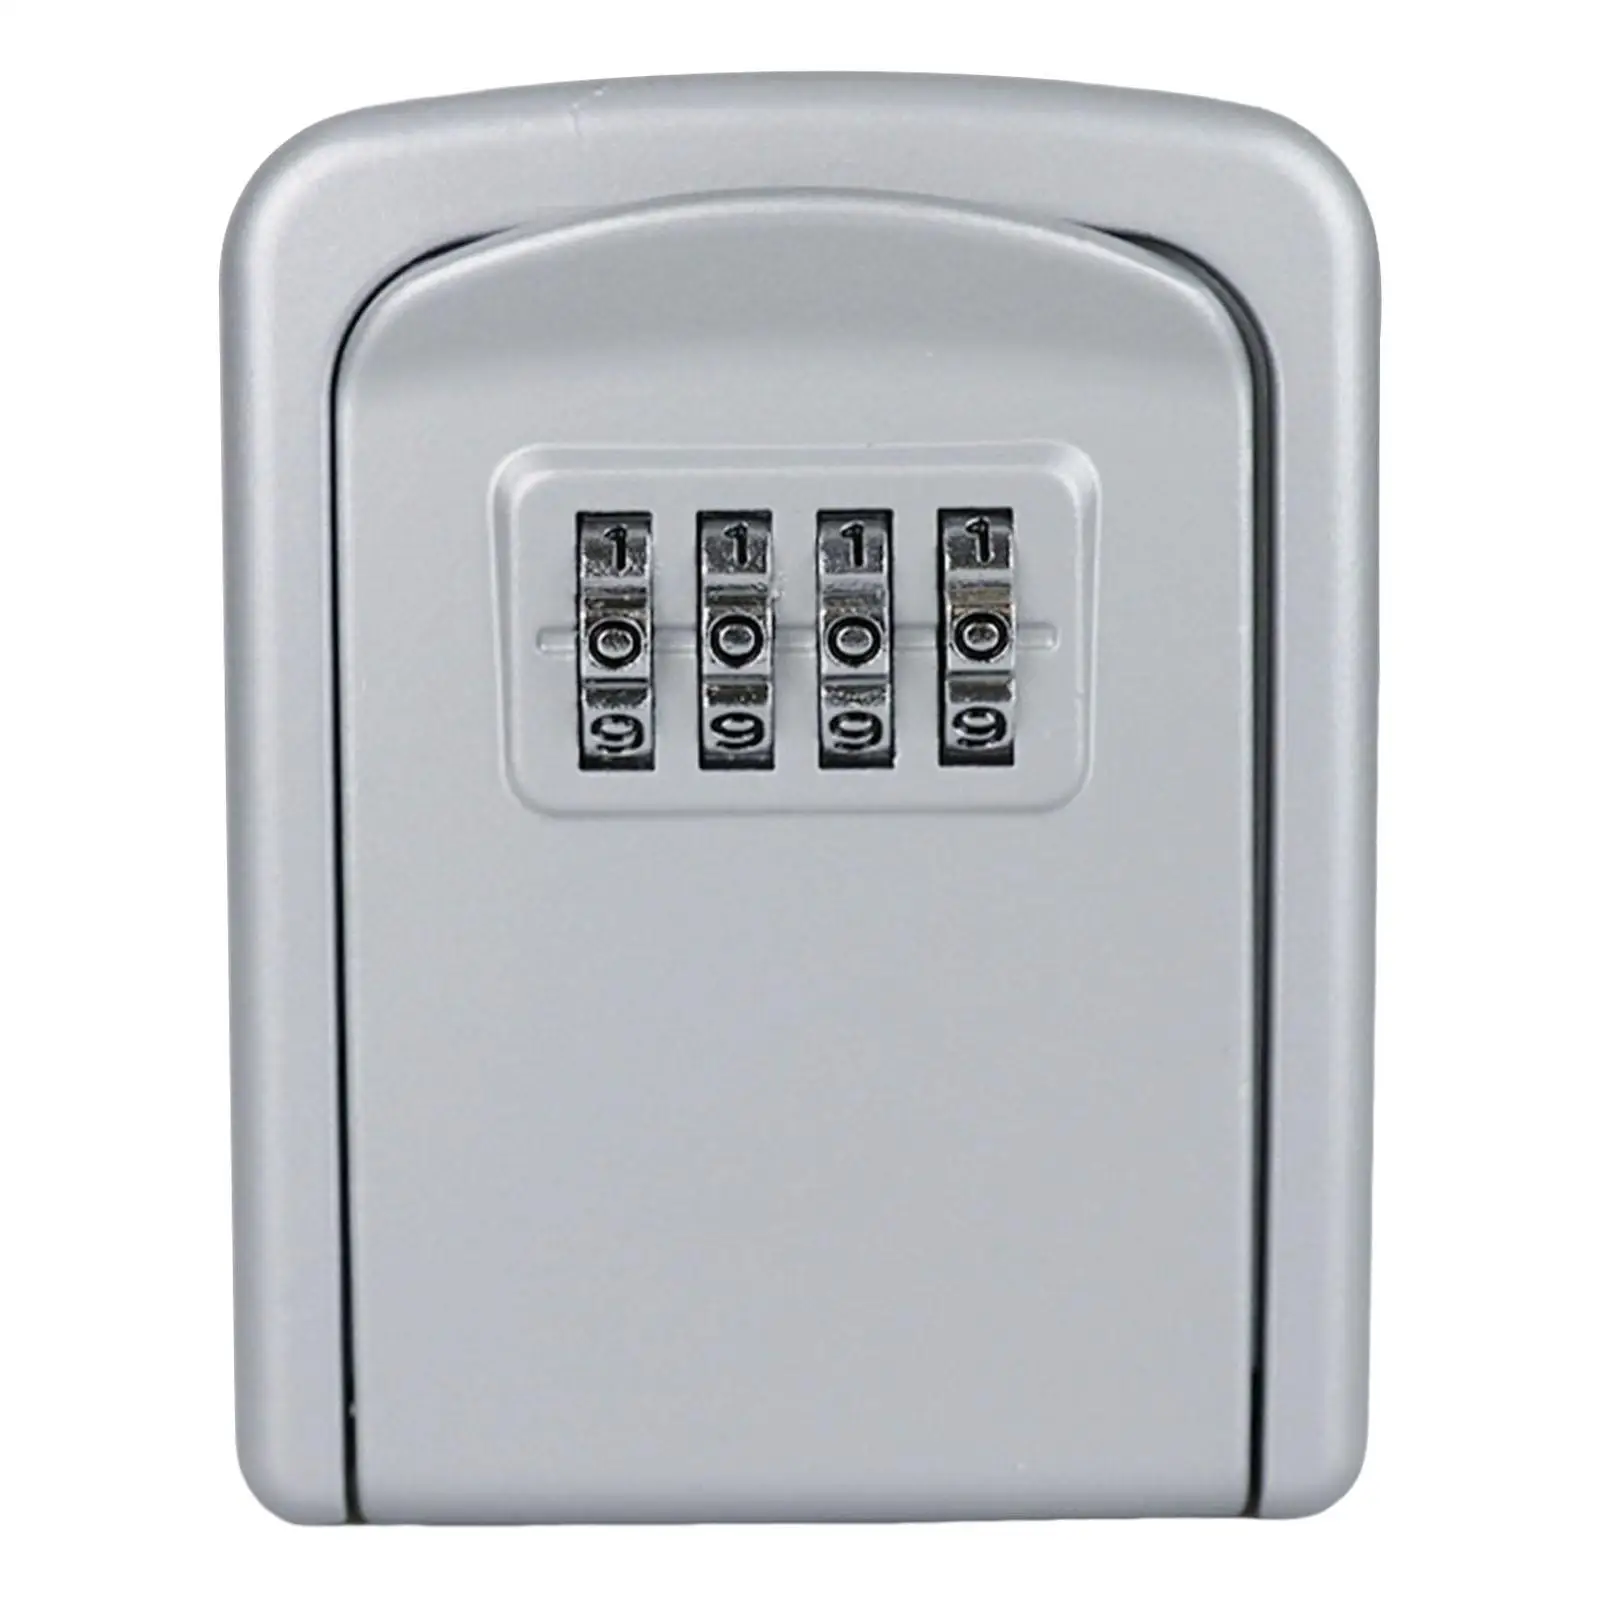 Outdoor Key Storage Lock Box Password Key Storage Case Wall Mounted 4 Digit for House Indoor Garage